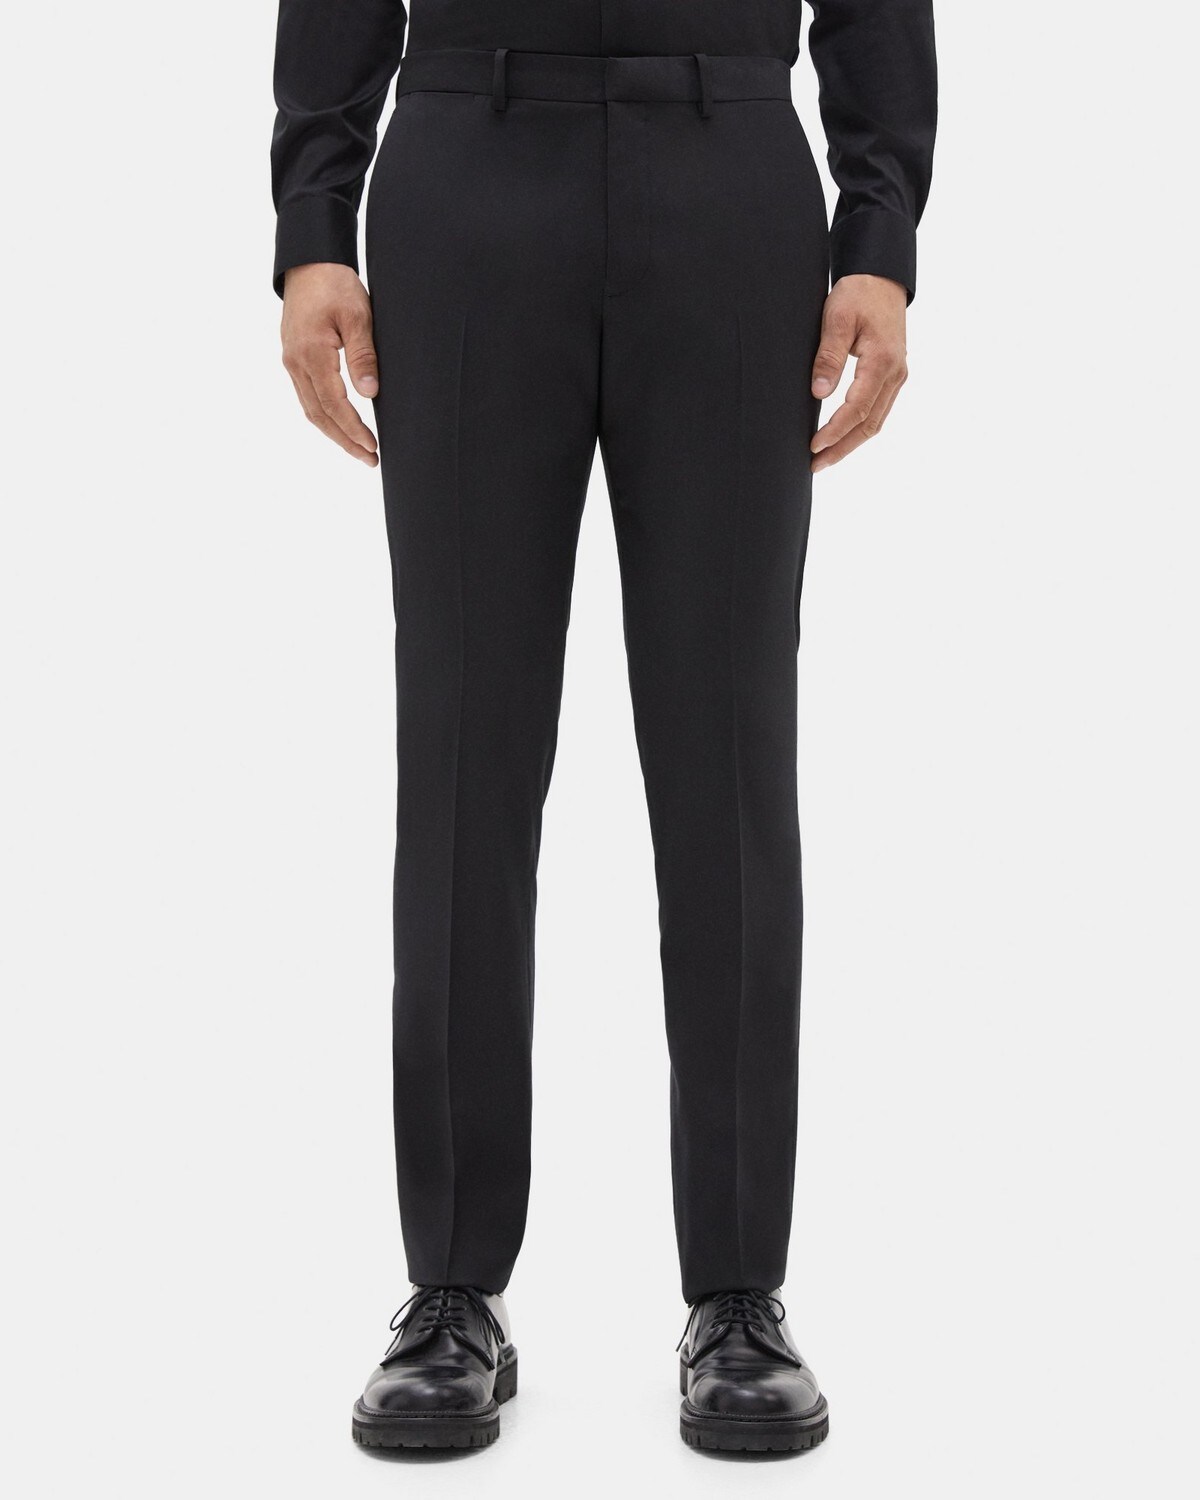 Slim-Fit Suit Pant in Sartorial Suiting